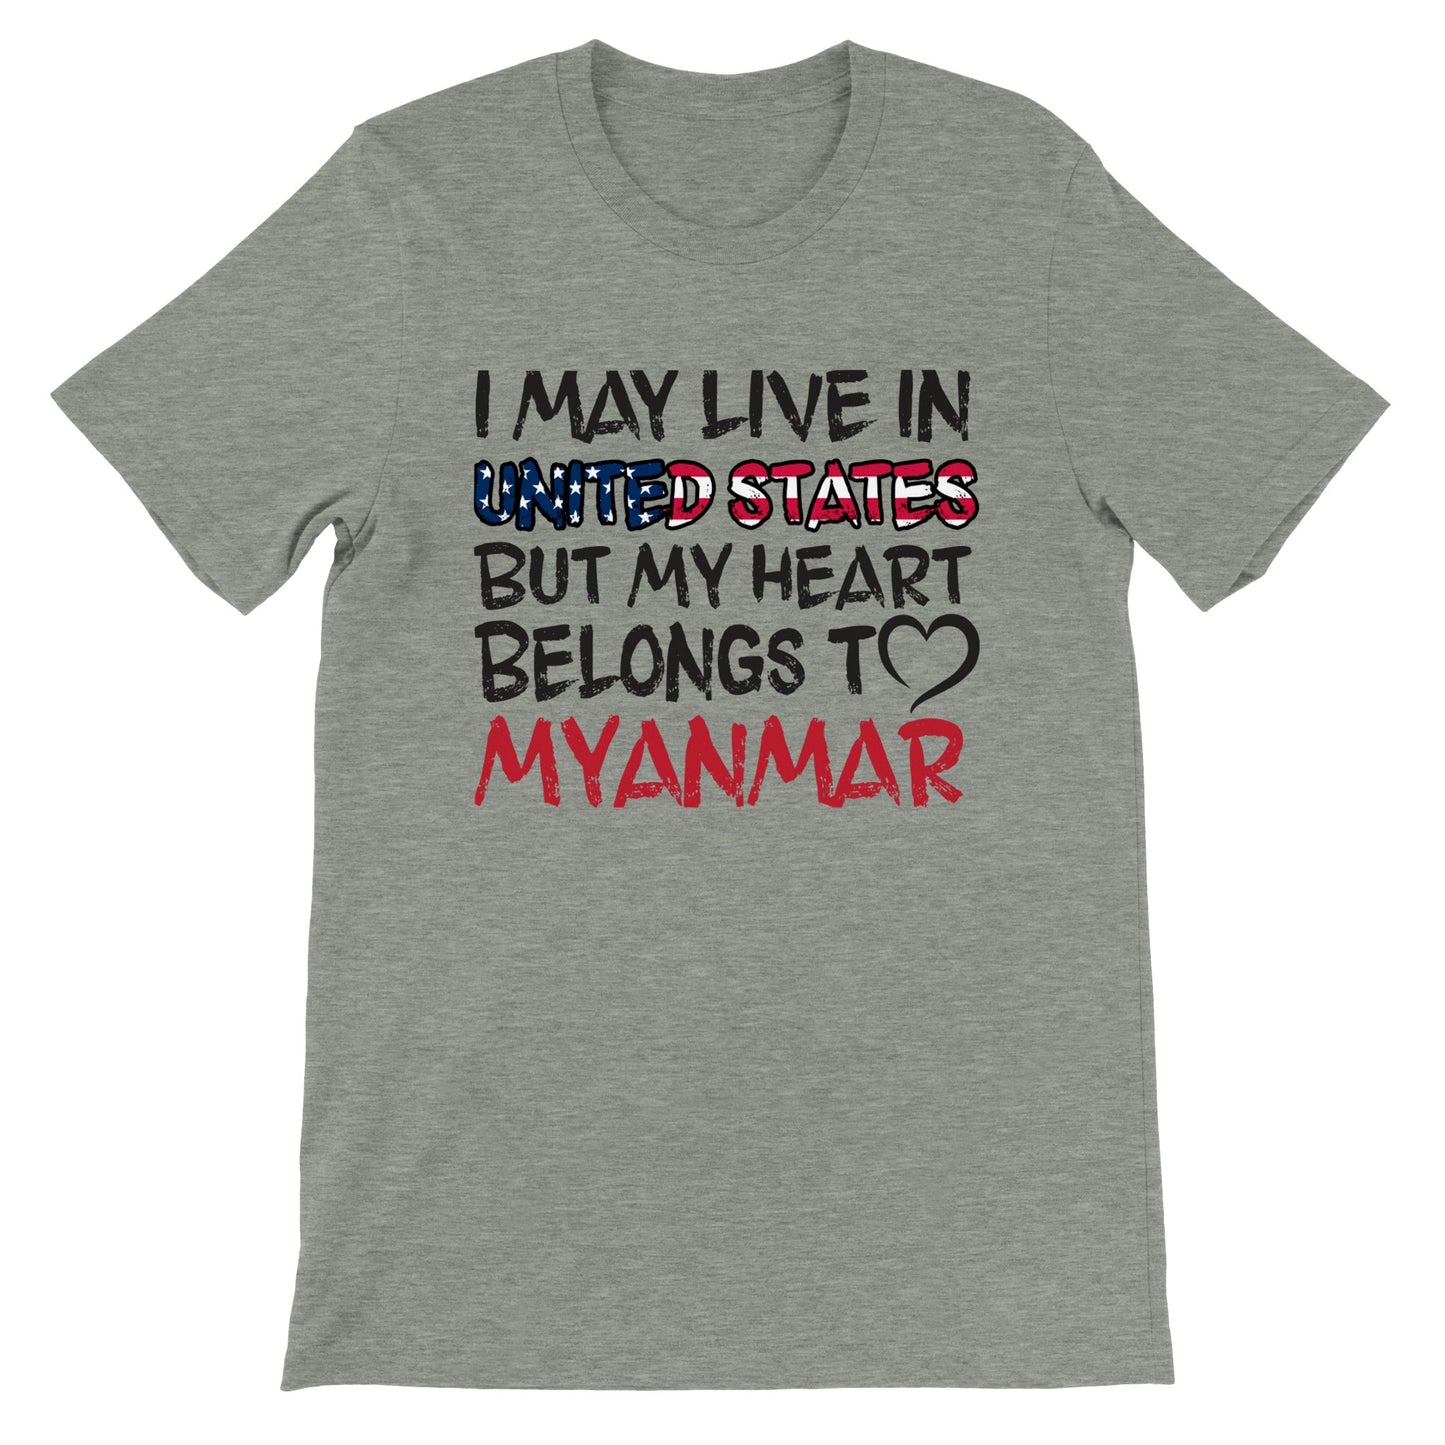 USA🇺🇸 Edition - My Heart Belongs to Myanmar